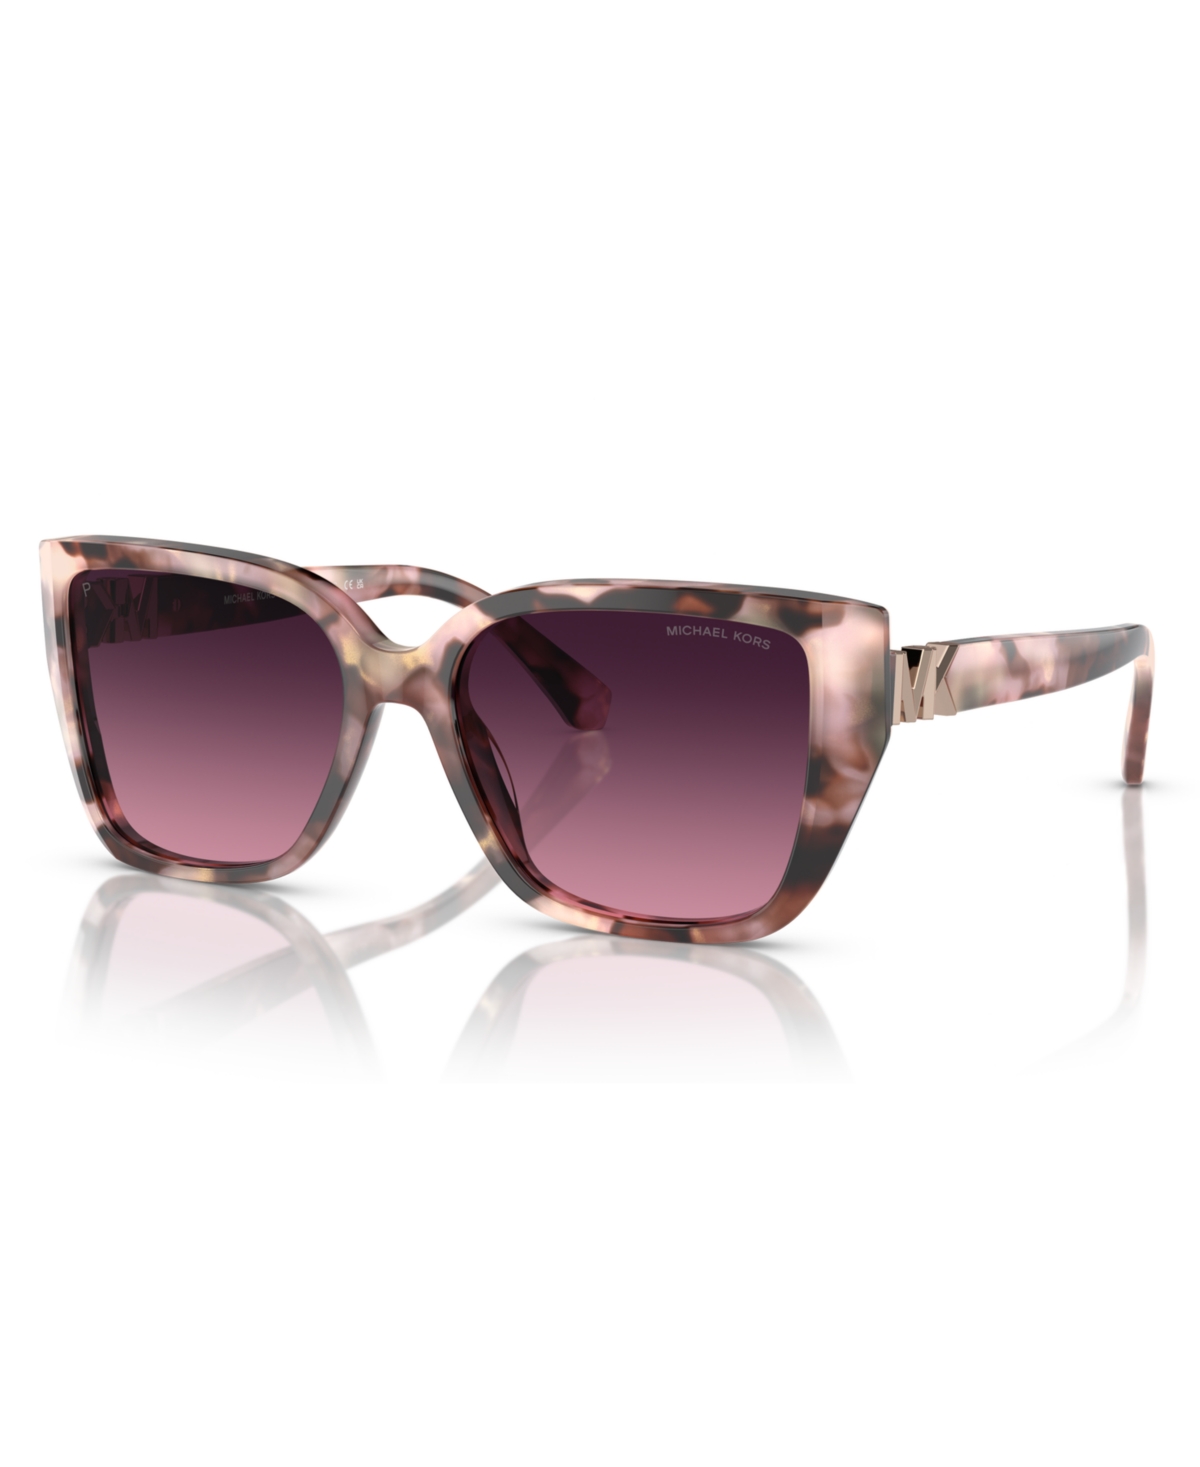 Michael Kors Women's Acadia Polarized Sunglasses, Gradient Mk2199 In Pink Pearlized Tortoise